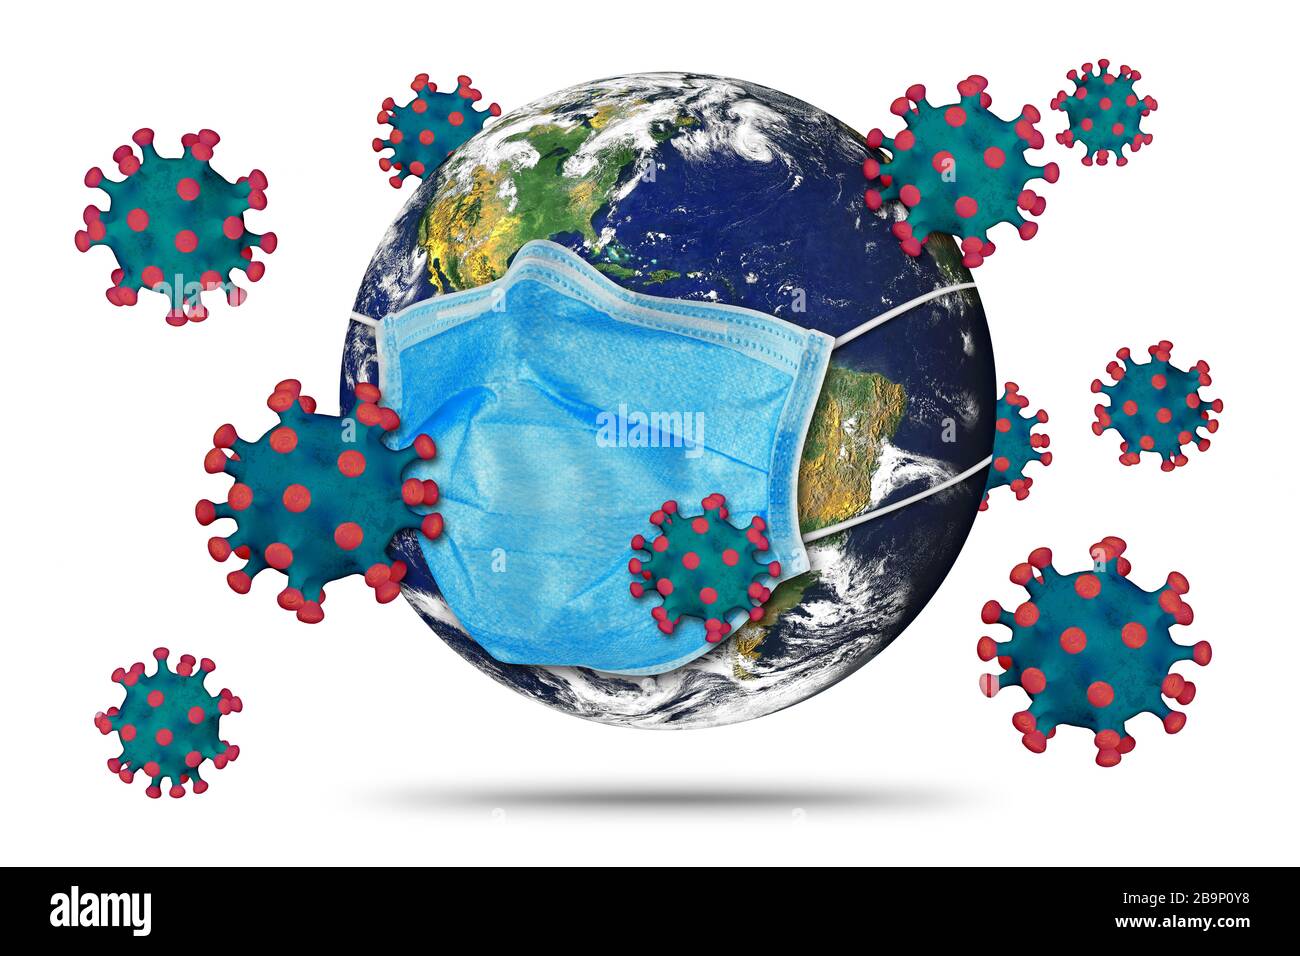 Coronavirus earth world globe with blue respirator breathing face mask. Corna virus global  outbreak pandemic epidemic medical prevention concept isol Stock Photo